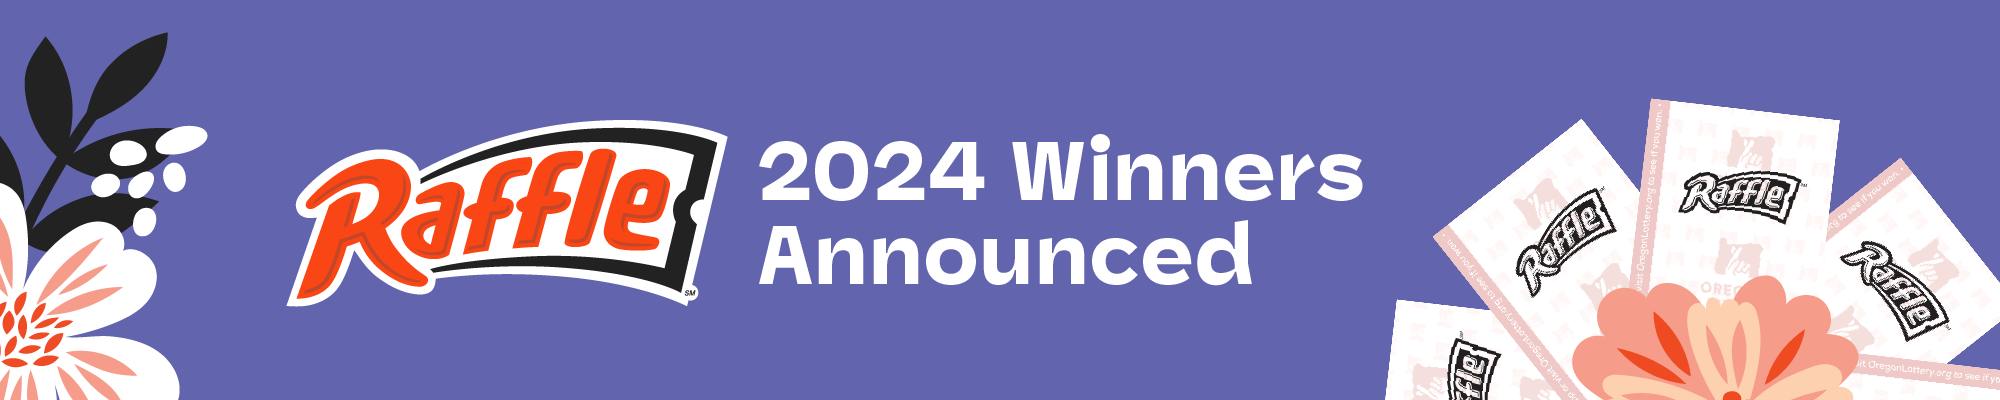 Raffle 2024 Winners Announced!